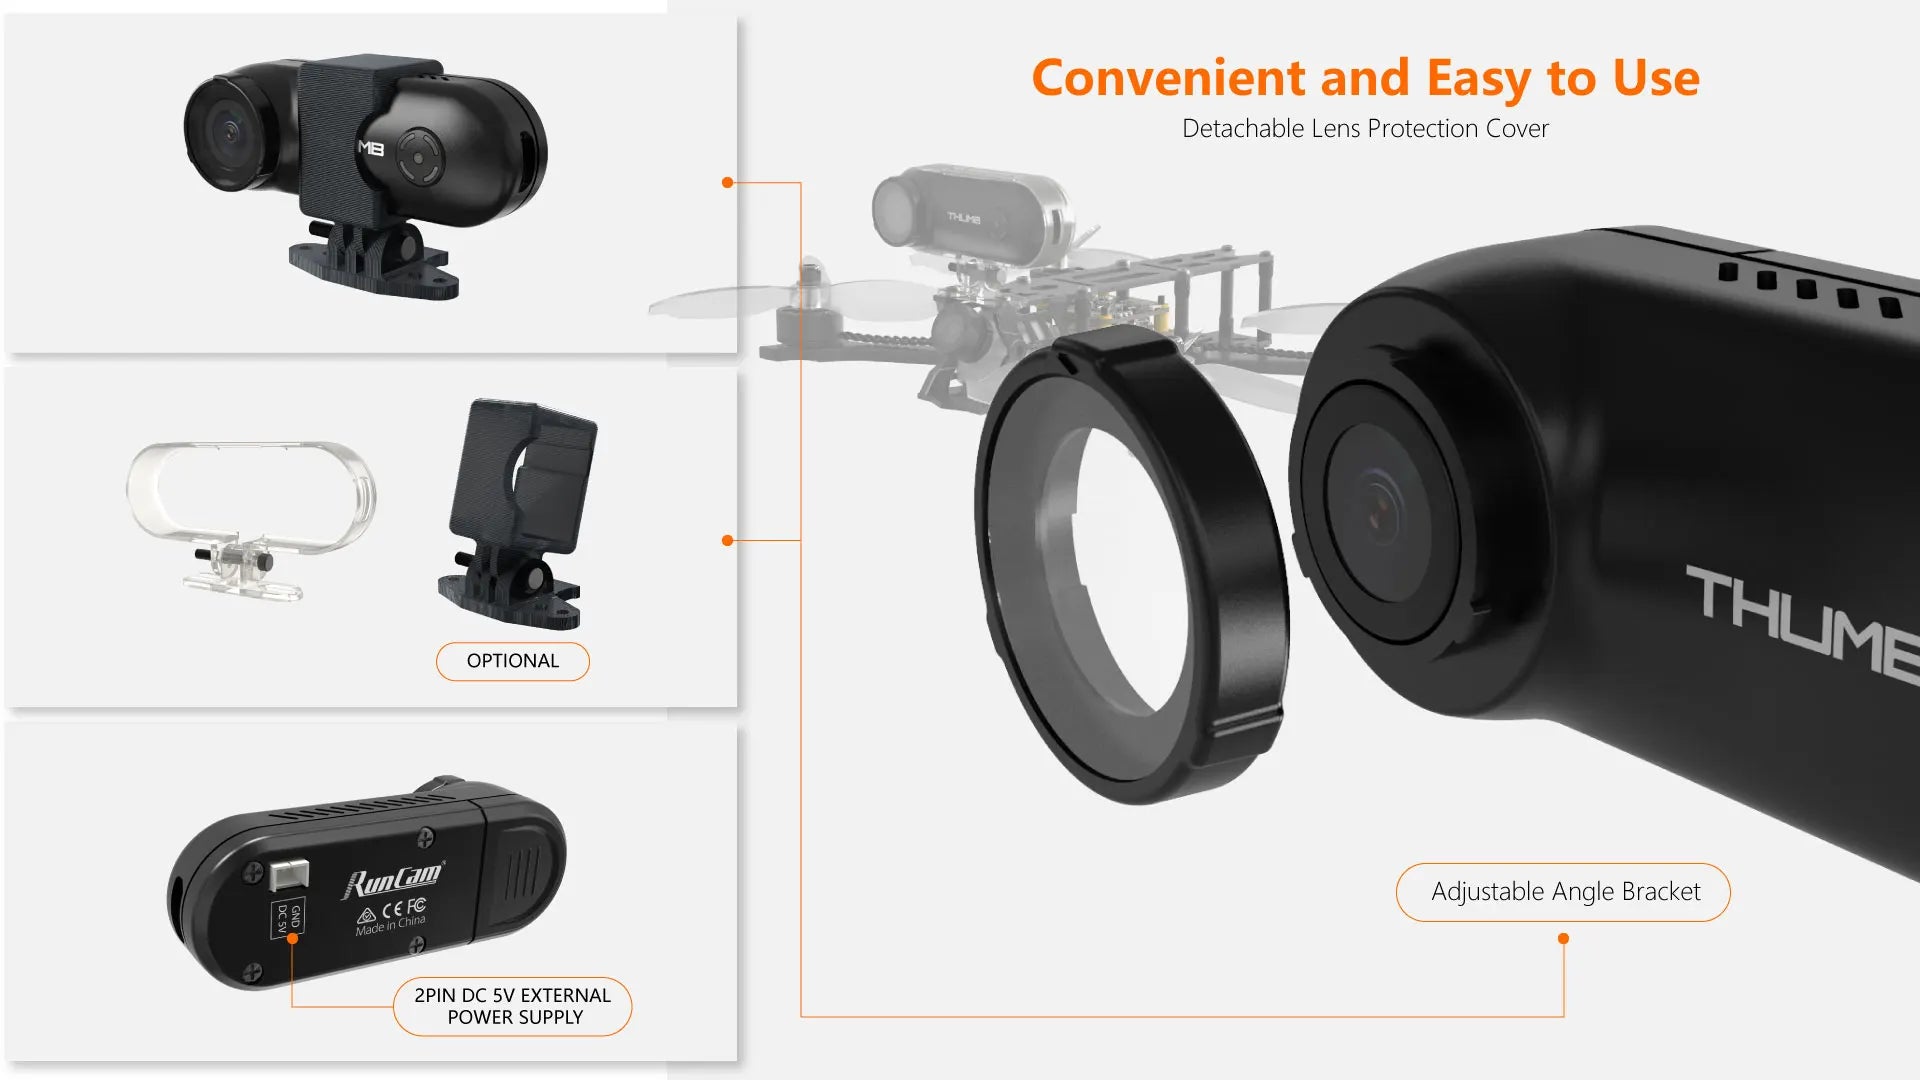 RunCam Thumb Camera, Detachable Lens Protection Cover OPTIONAL 0) (€FG Adjustable Angle